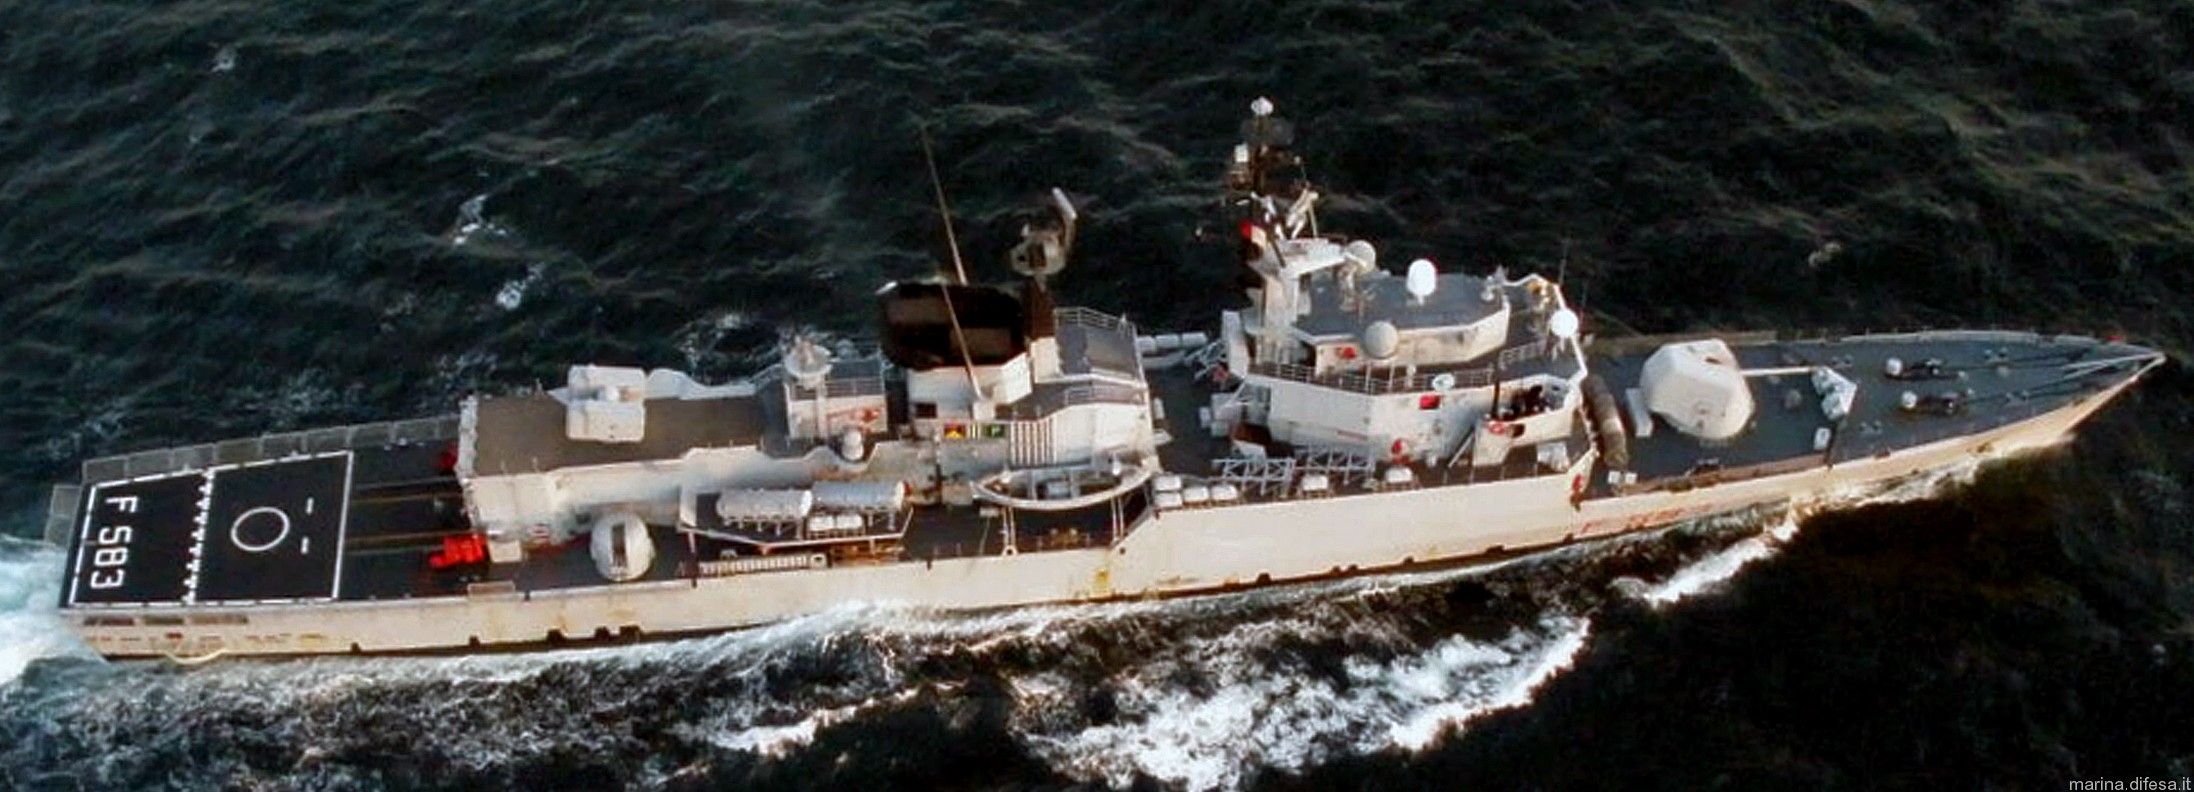 f-583 aviere nave its soldati lupo class frigate italian navy marina militare 08